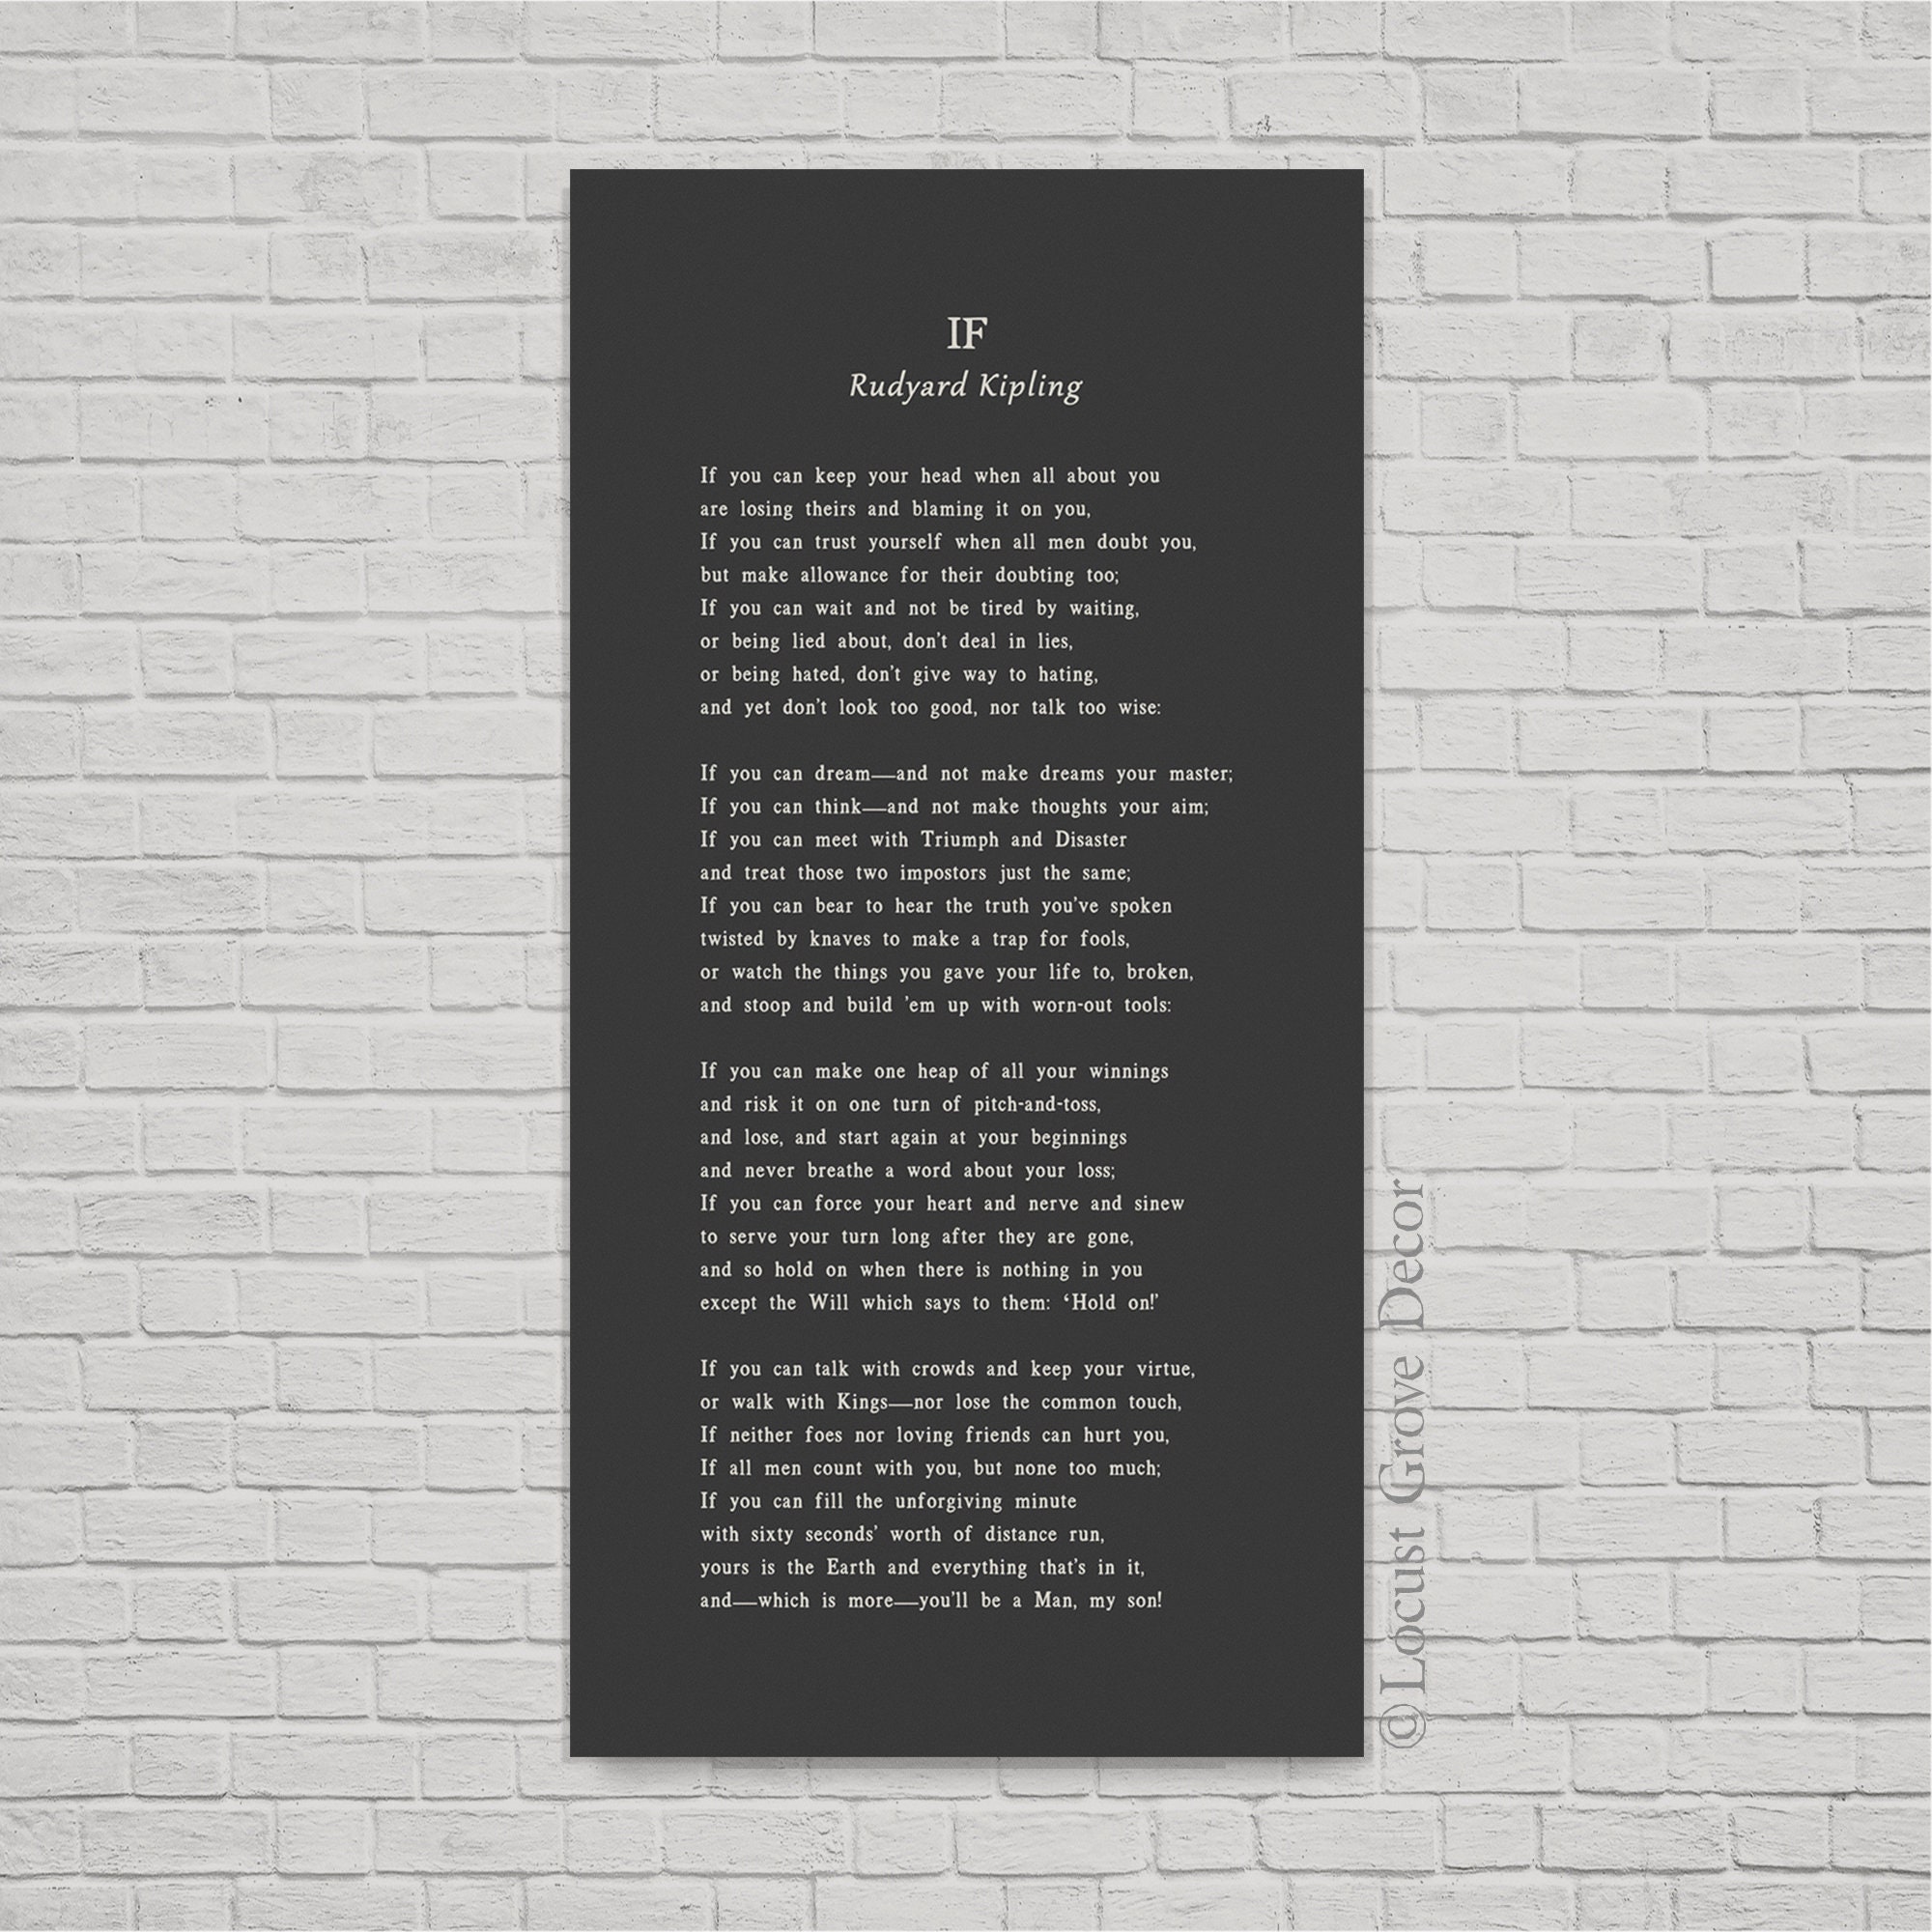 If 18x36 Inch Metal Print If by Rudyard Kipling If Poem | Etsy